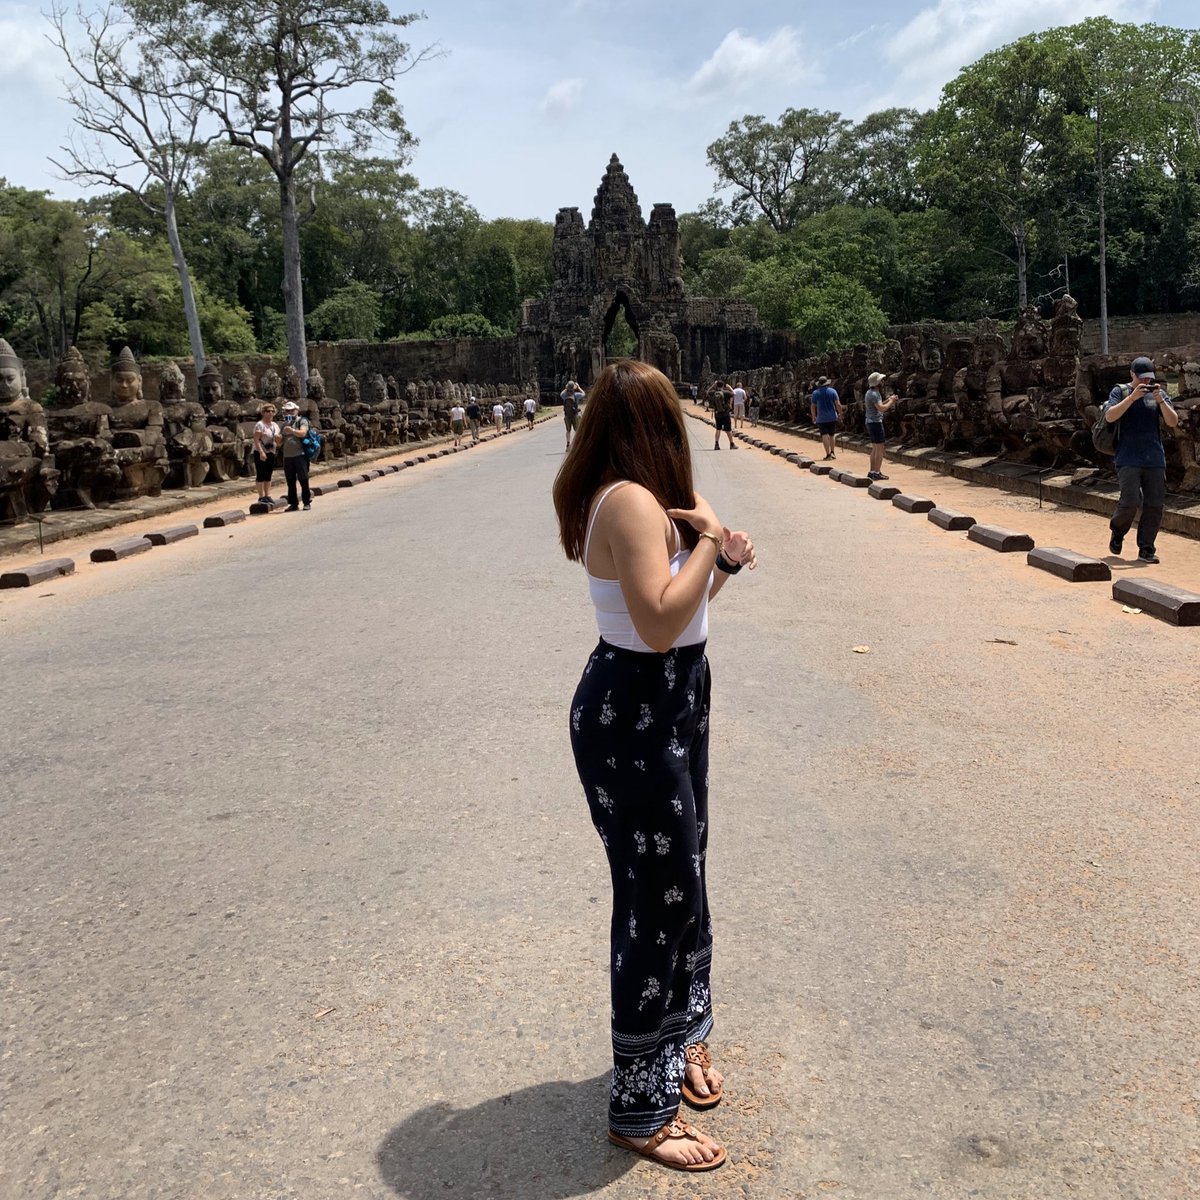  Siem Reap, Cambodia 